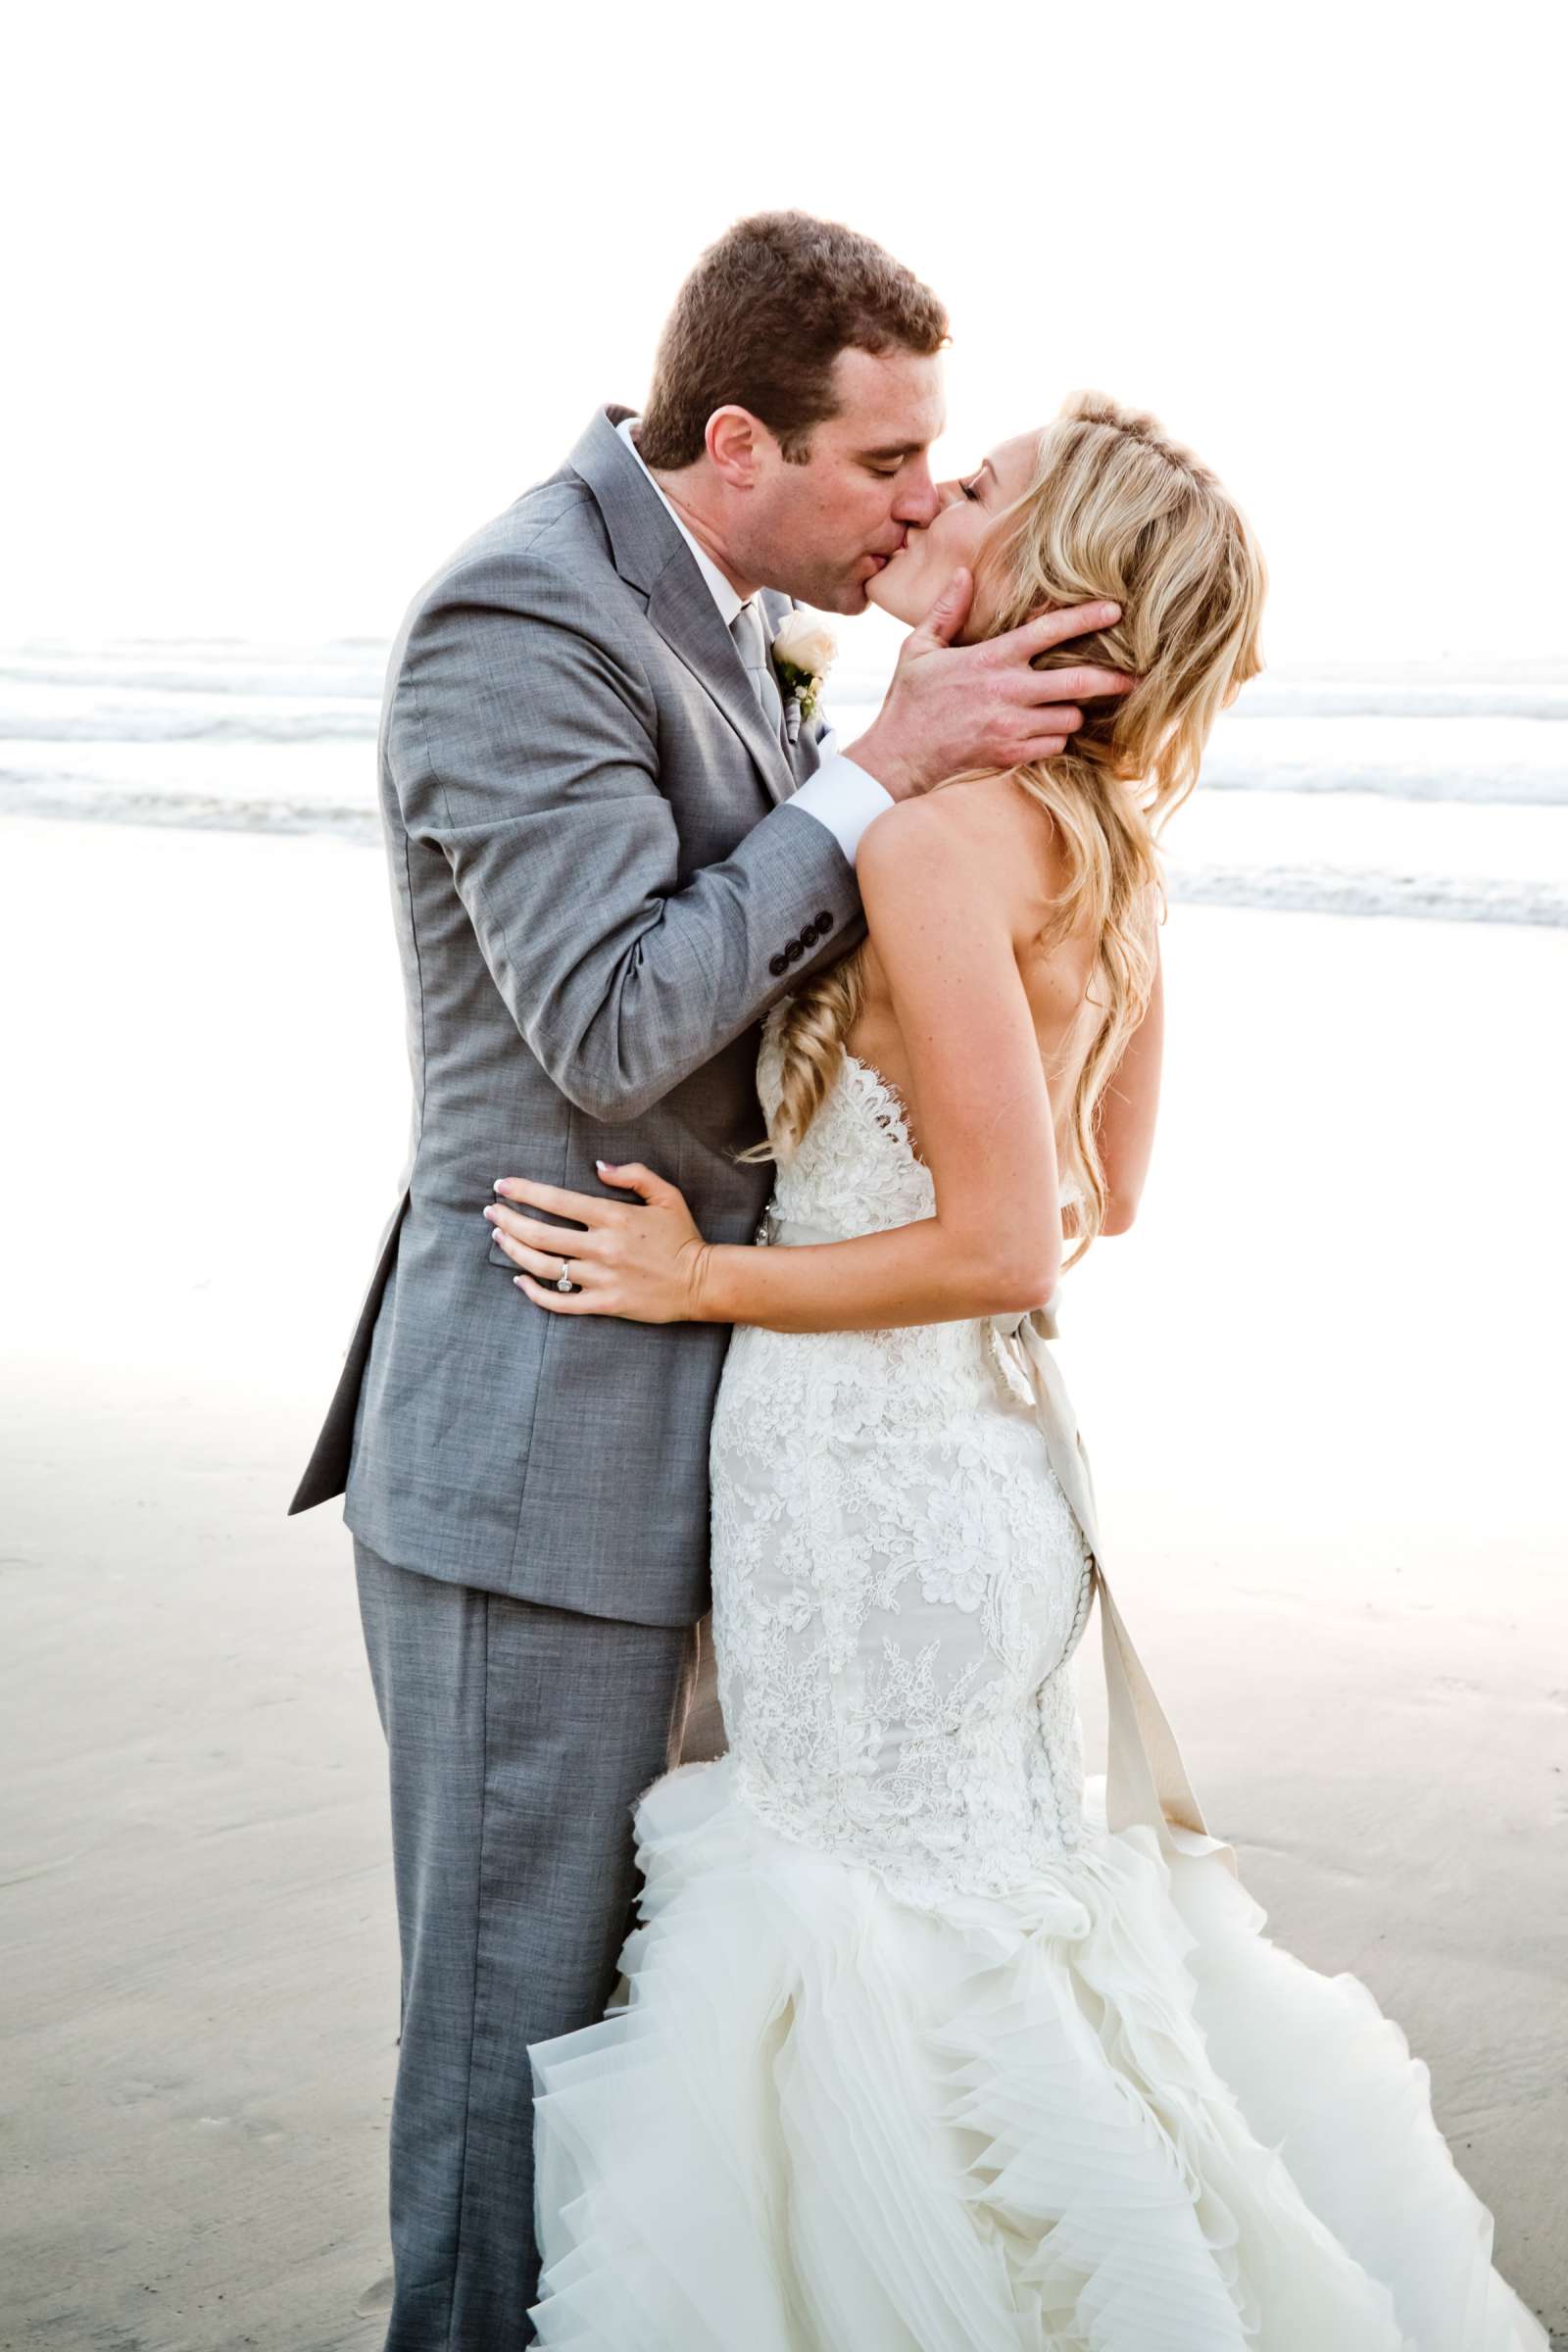 Scripps Seaside Forum Wedding, Cassie and Rob Wedding Photo #3 by True Photography